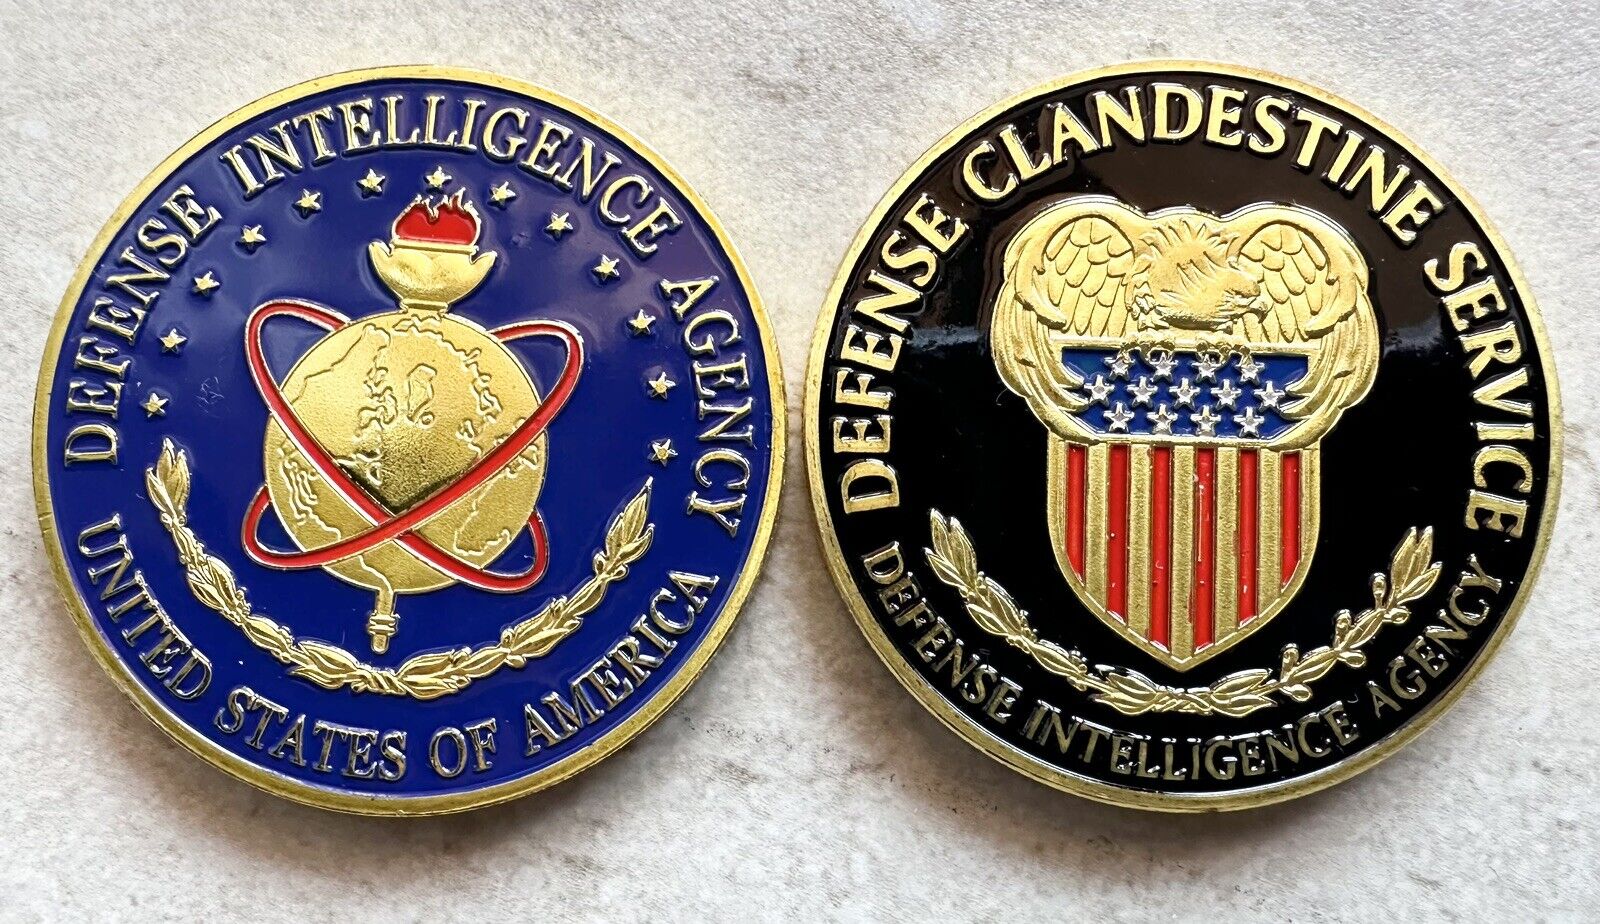 2 Defense Intelligence Agency (DIA) & Defense Clandestine Service Challenge Coin